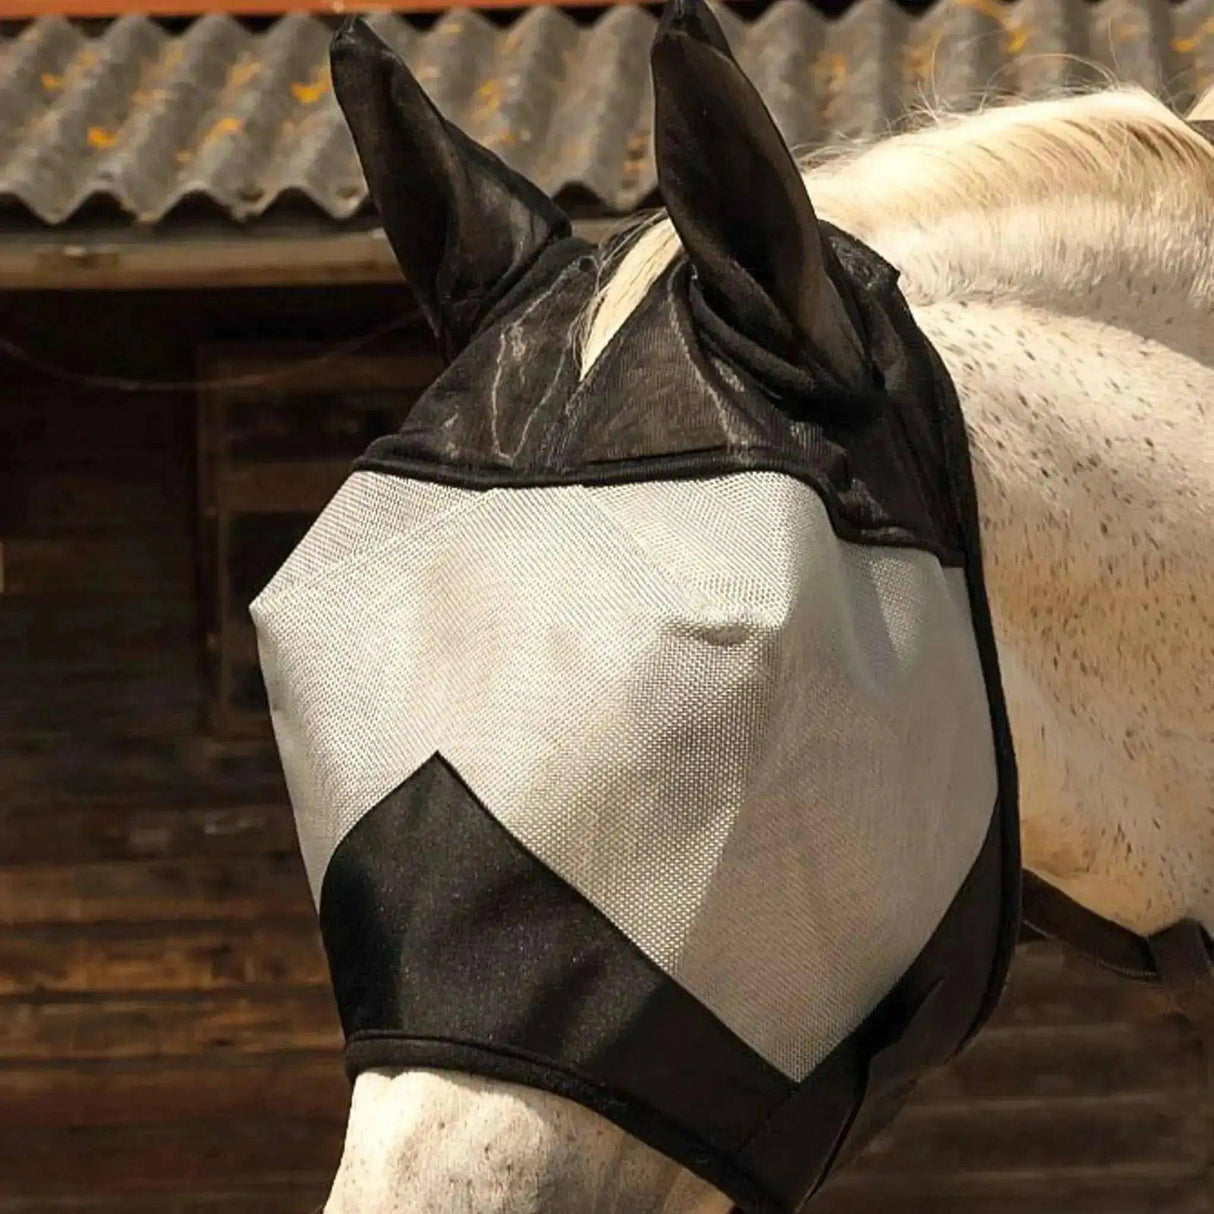 Rhinegold Fly Mask With Ears Black / Grey Cob Rhinegold Fly Mask Barnstaple Equestrian Supplies